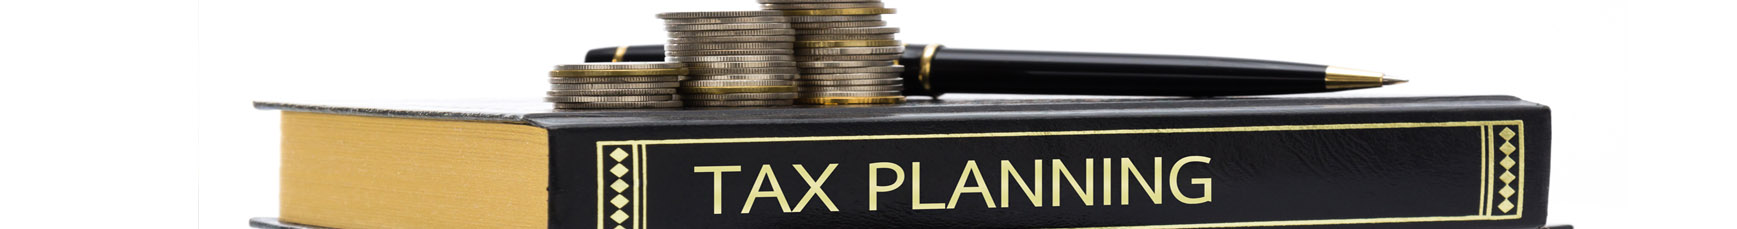 Tax-Planning-photo-bnr